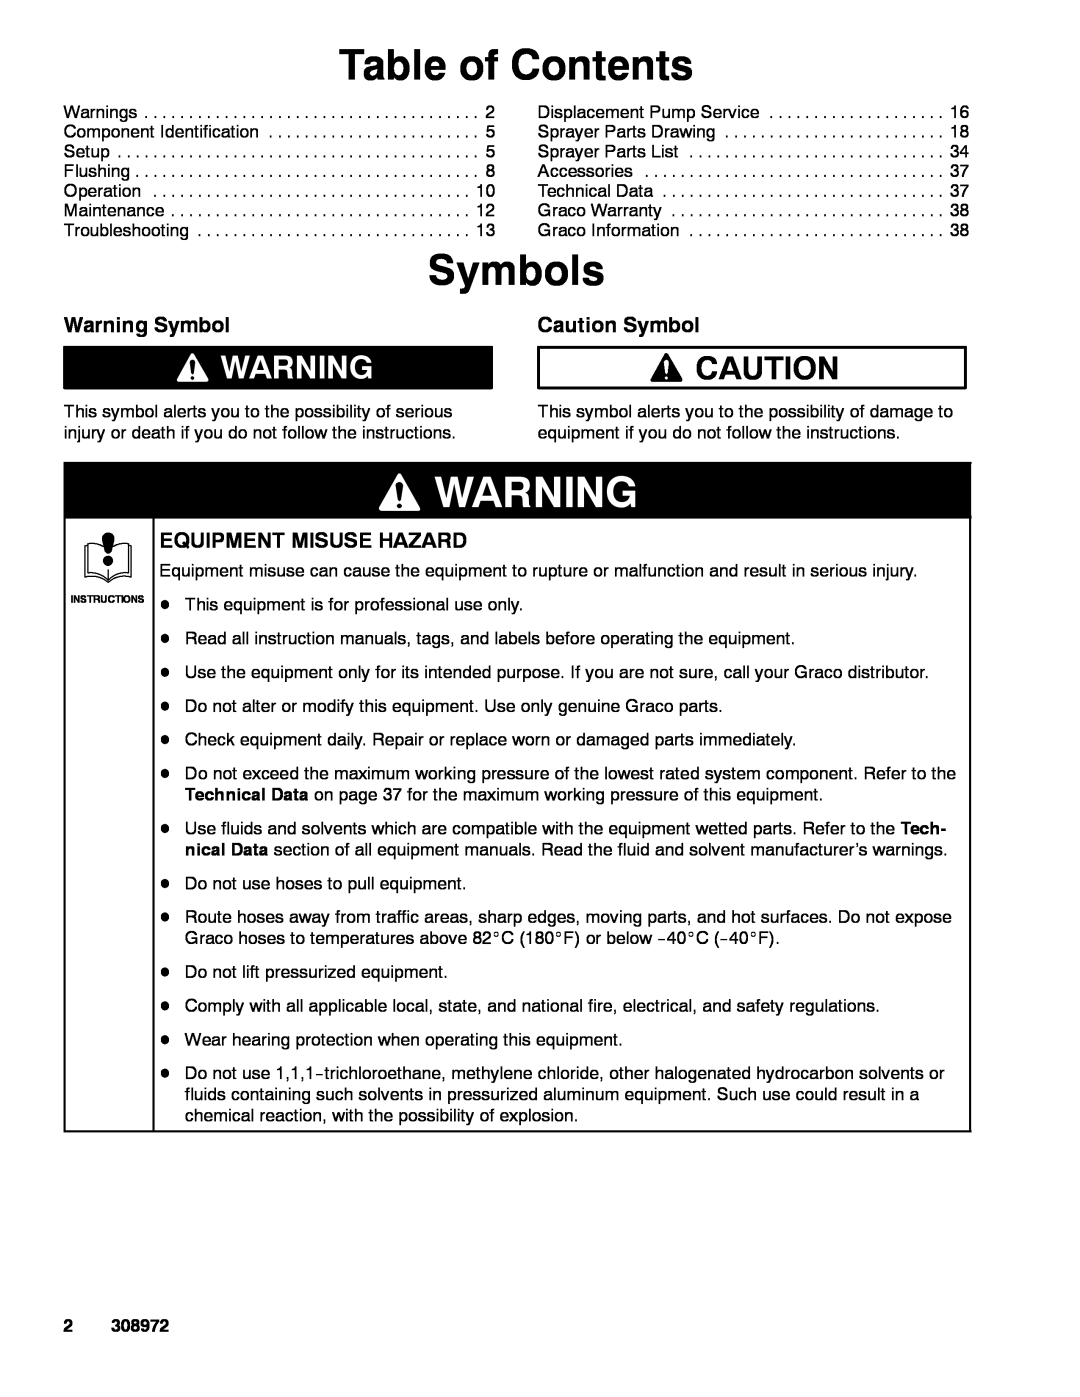 Graco Inc 965165, 687327, 687100, 965168 Table of Contents, Symbols, Warning Symbol, Caution Symbol, Equipment Misuse Hazard 